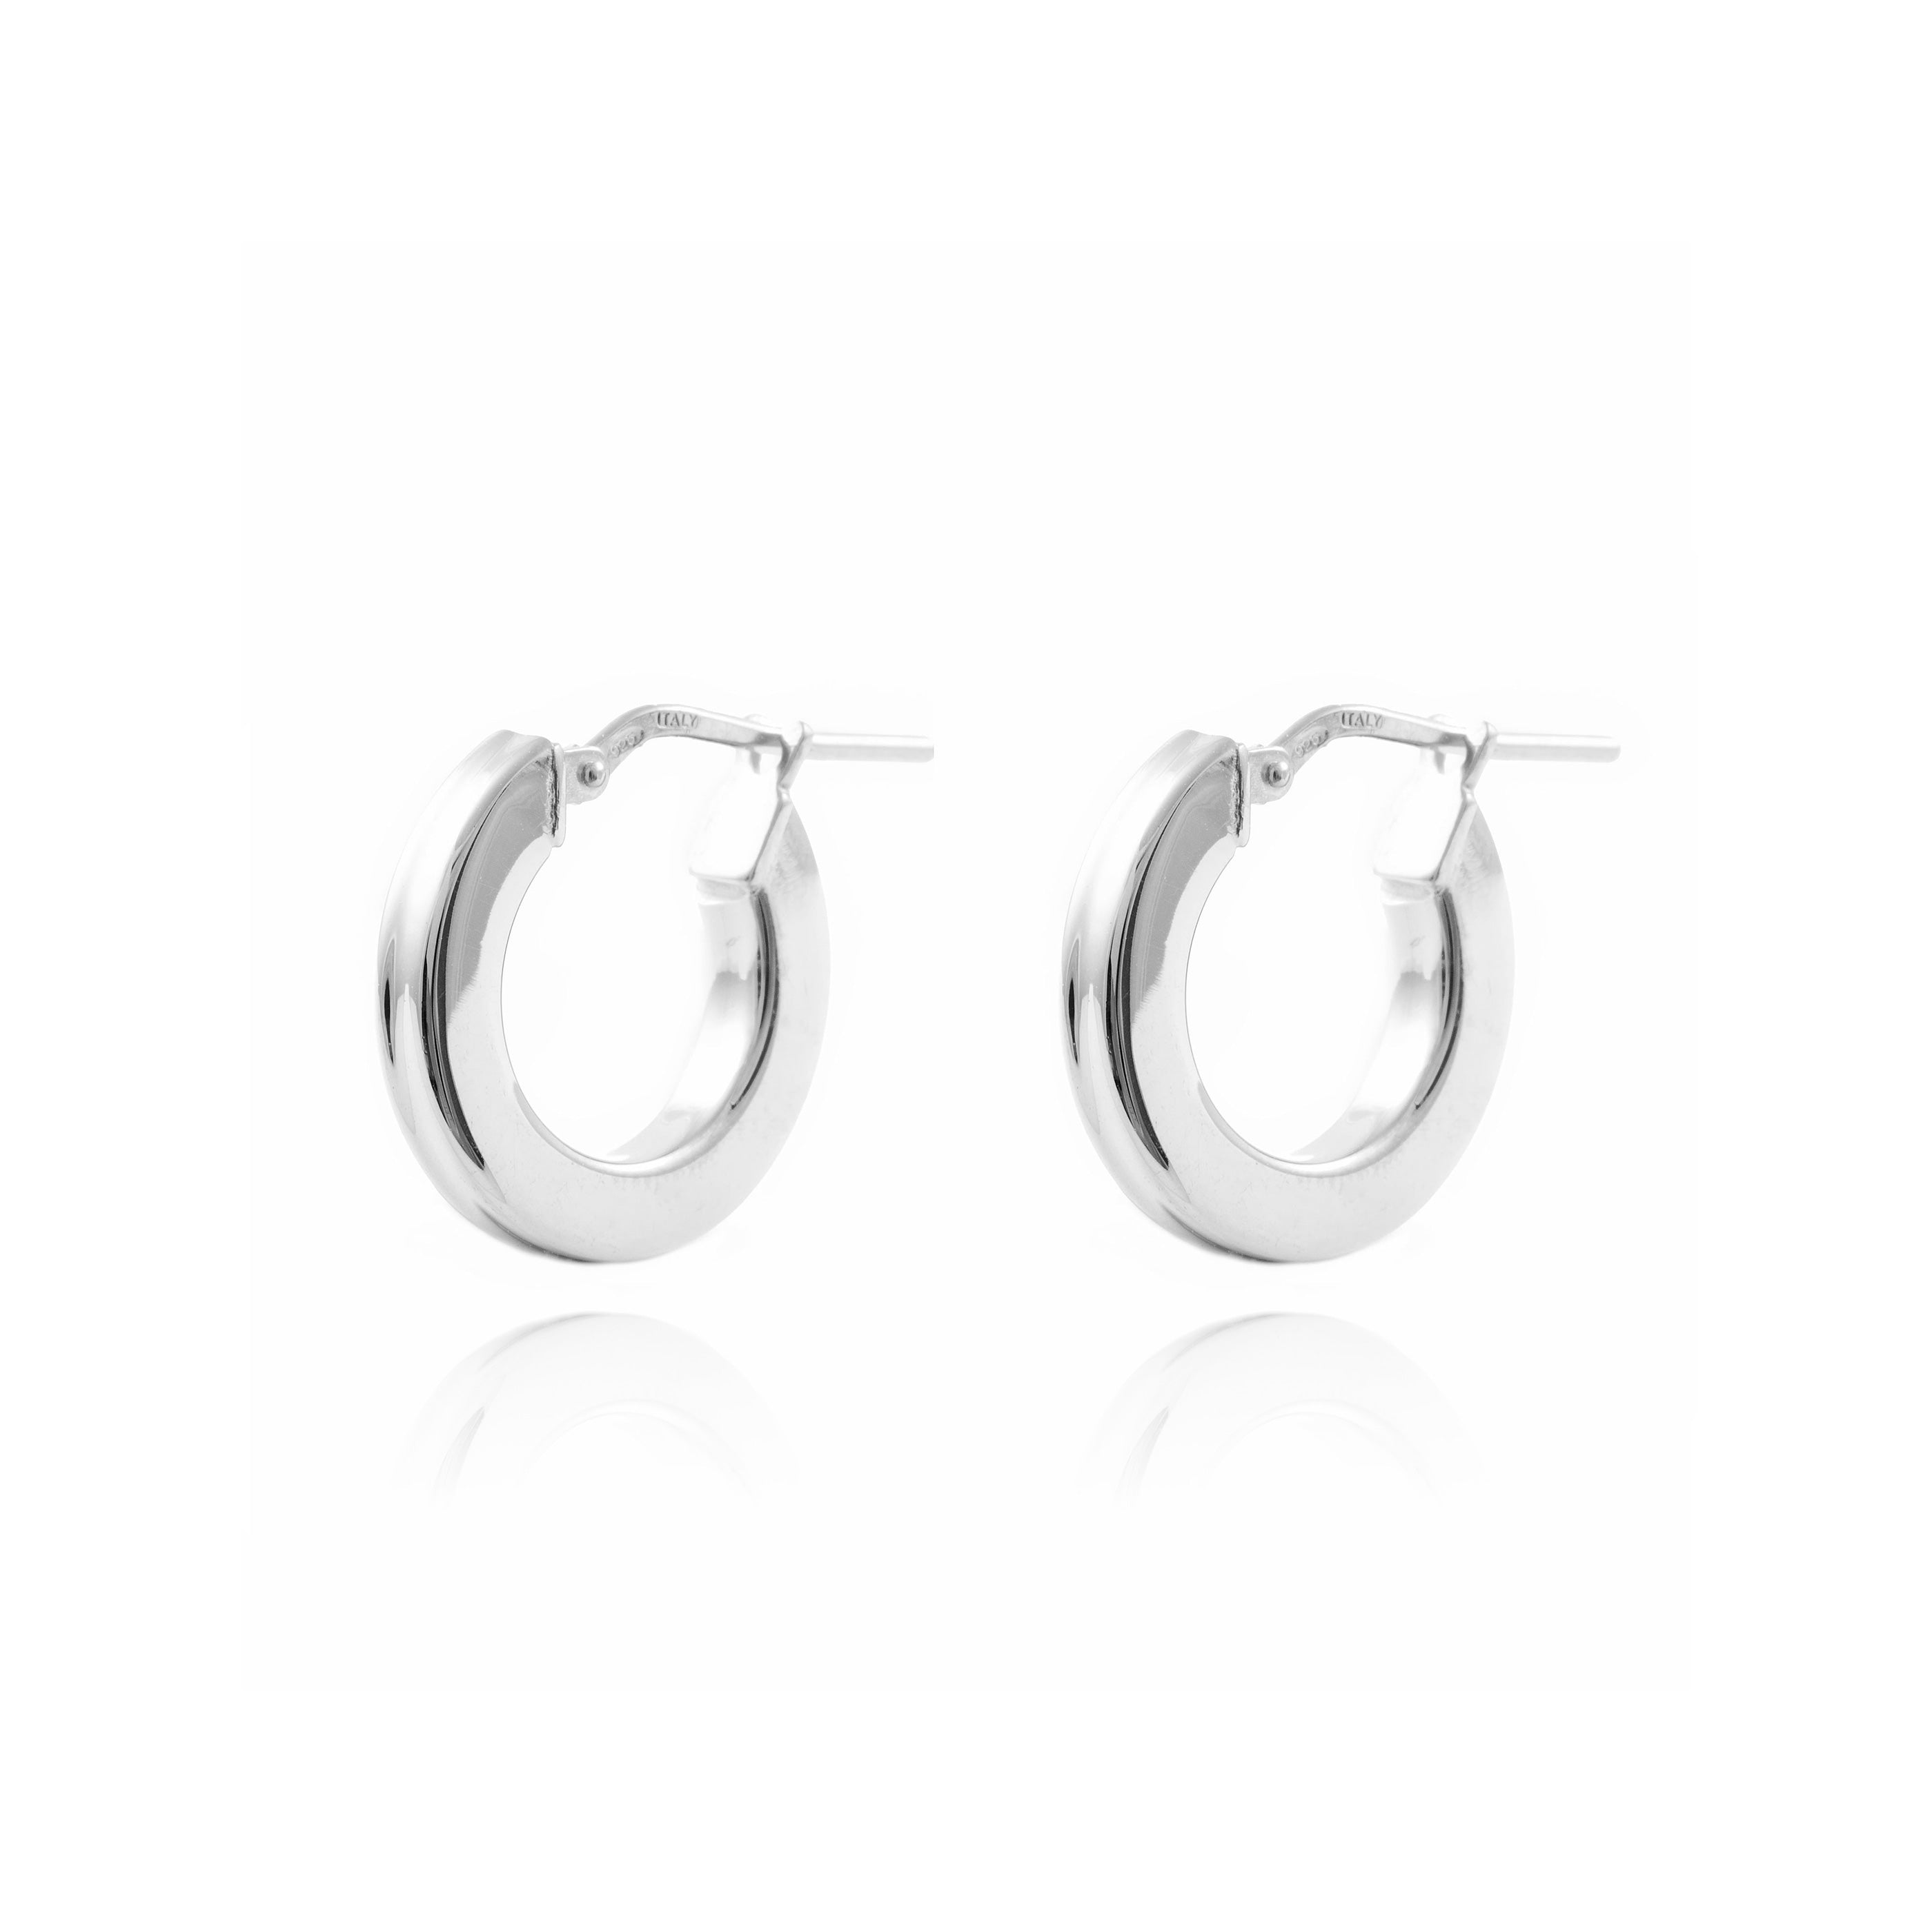 Sterling Silver Shiny Square Hoop Earrings 16 x 3 mm